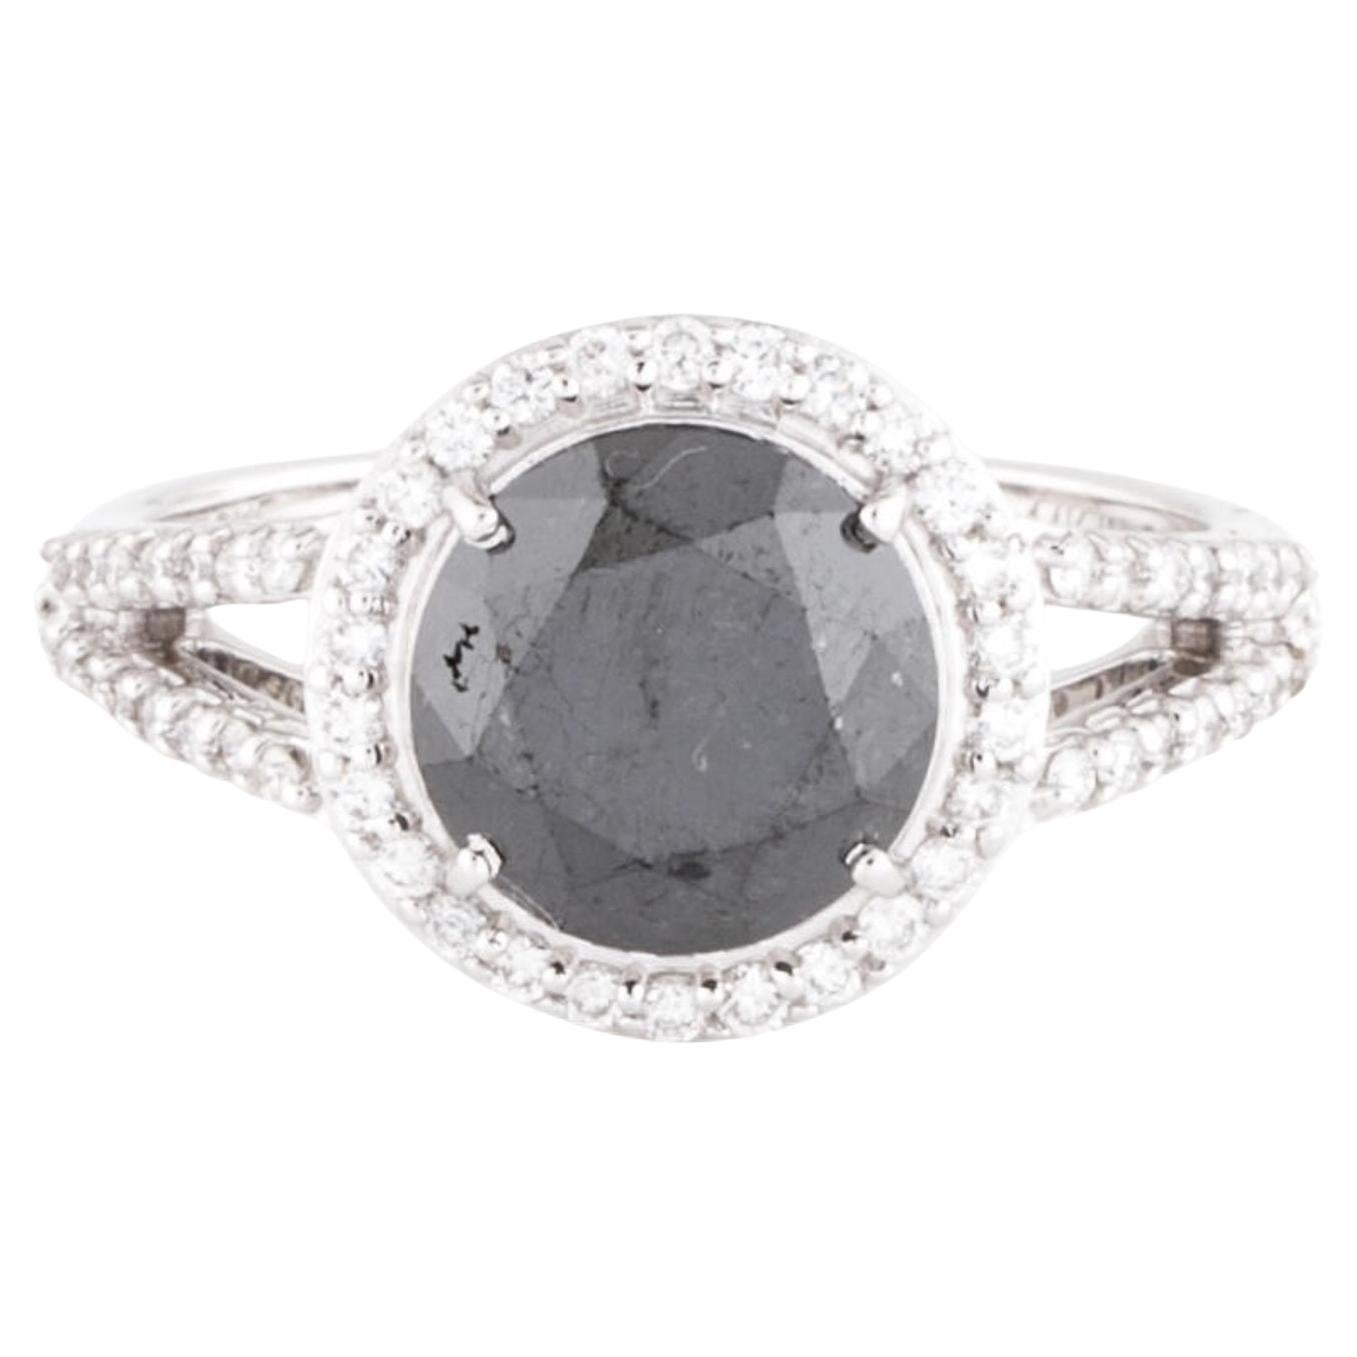 Stunning 2.63ct Diamond Engagement Ring, Size 6.75 - Elegant Statement Jewelry